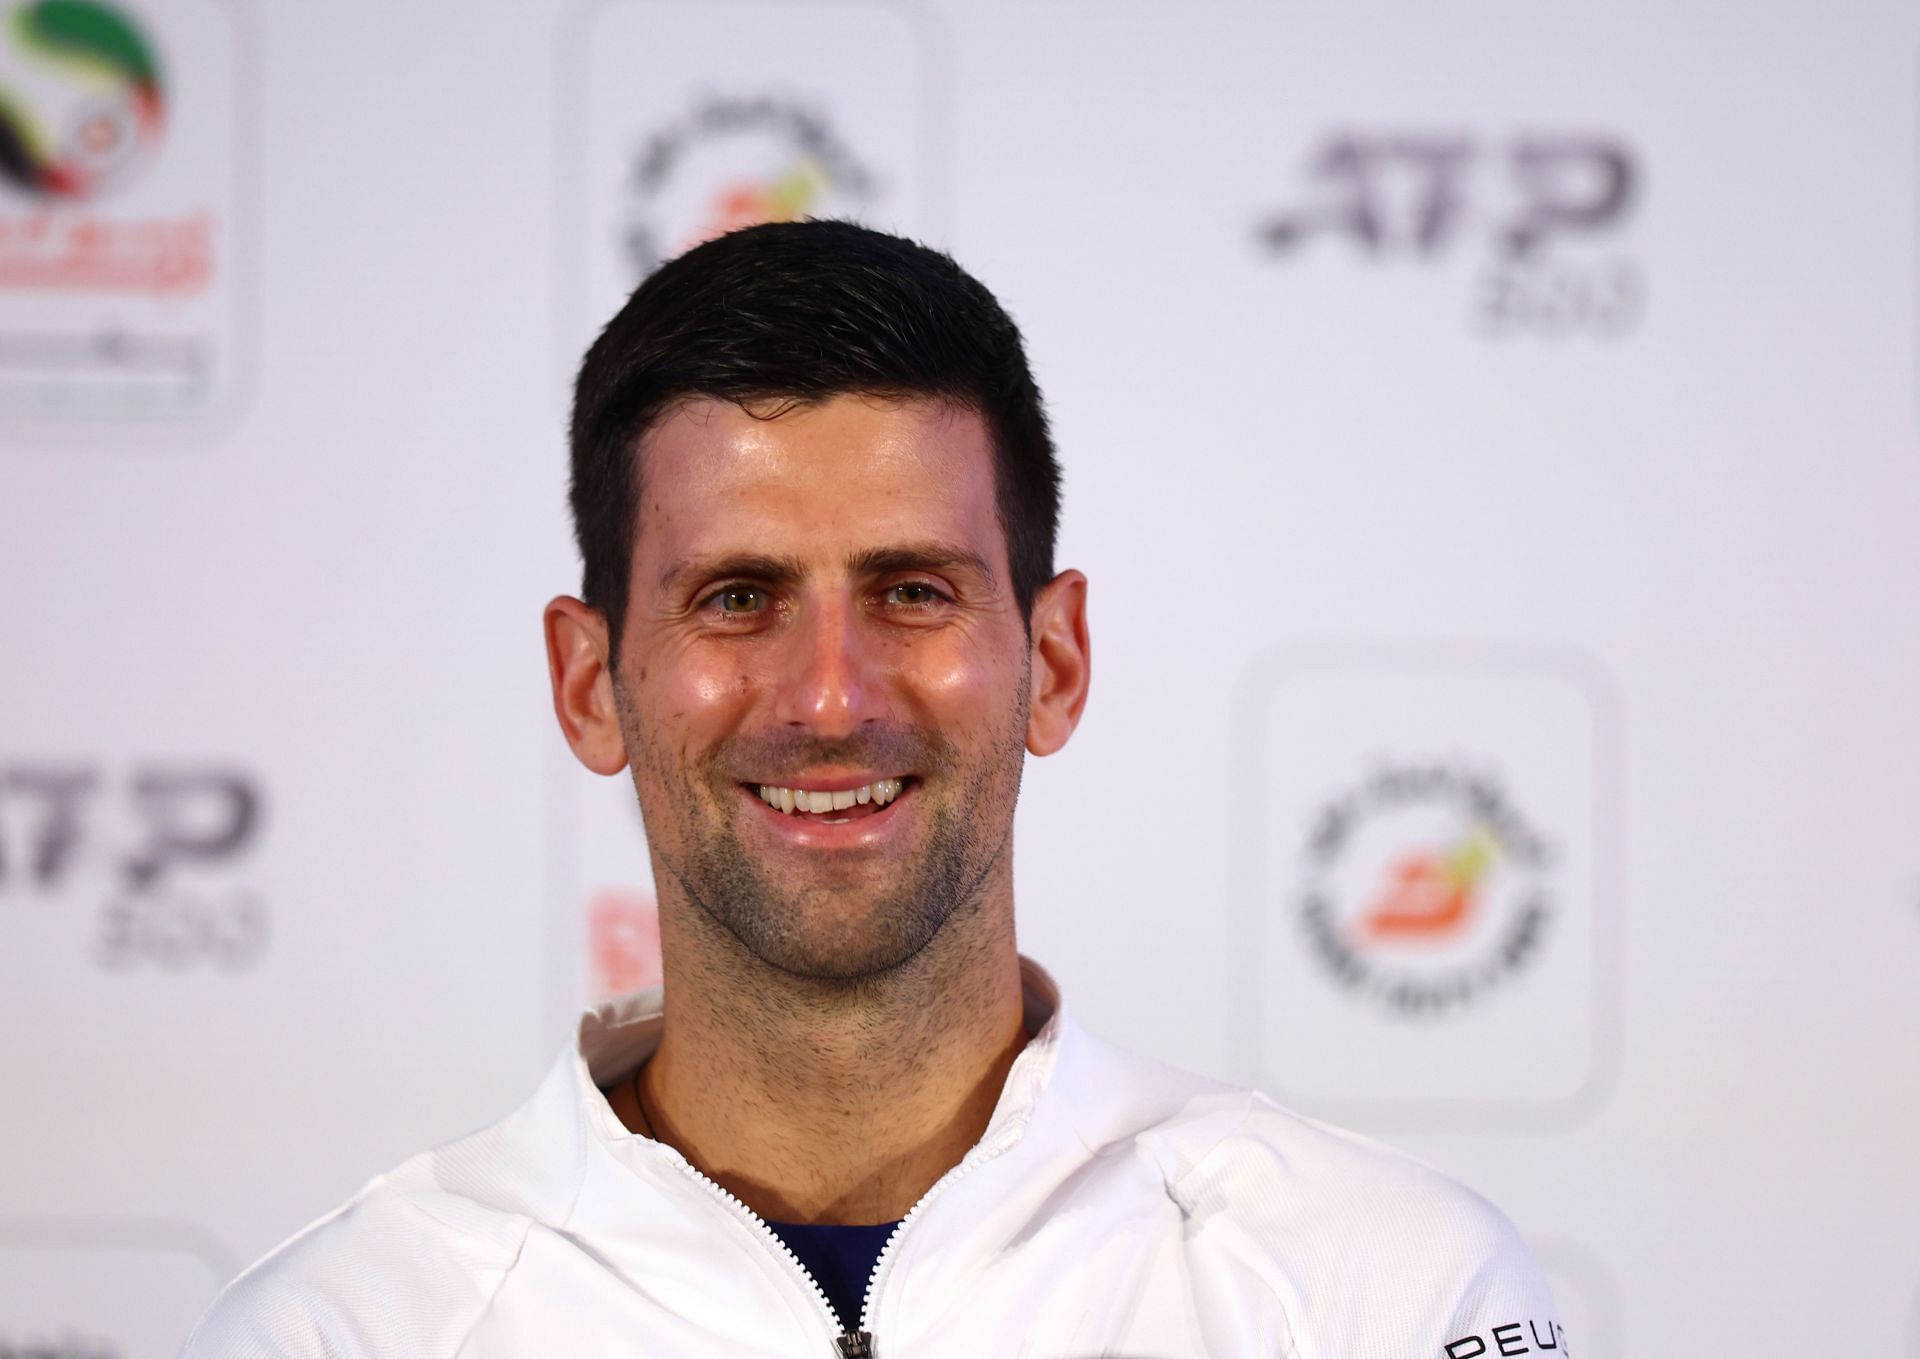 Novak Djokovic is a three-time US Open champion